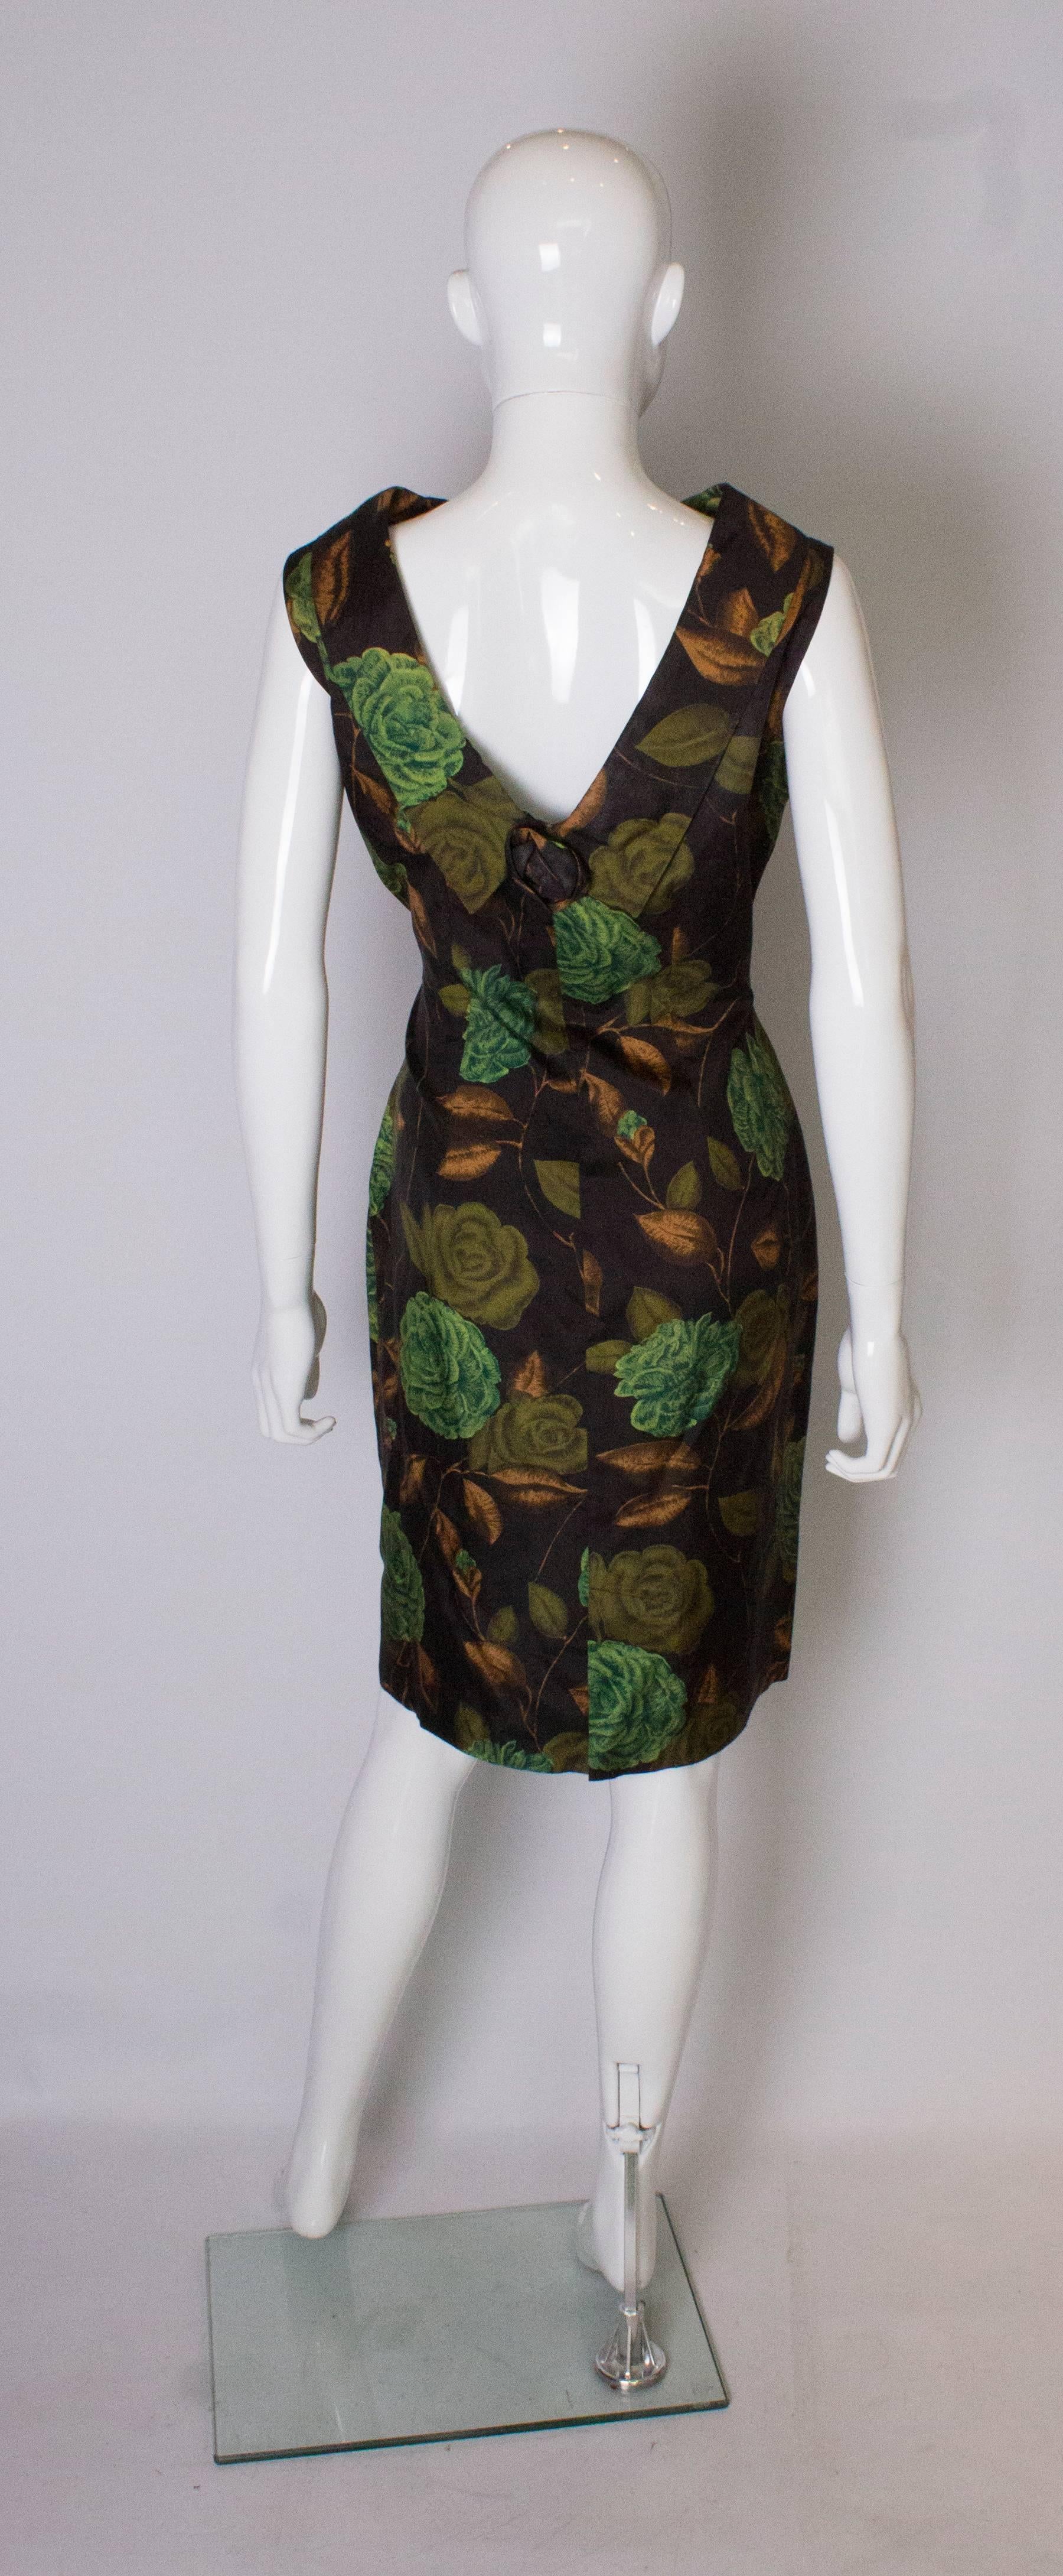 A Vintage 1950s floral printed wiggle Shift dress 1